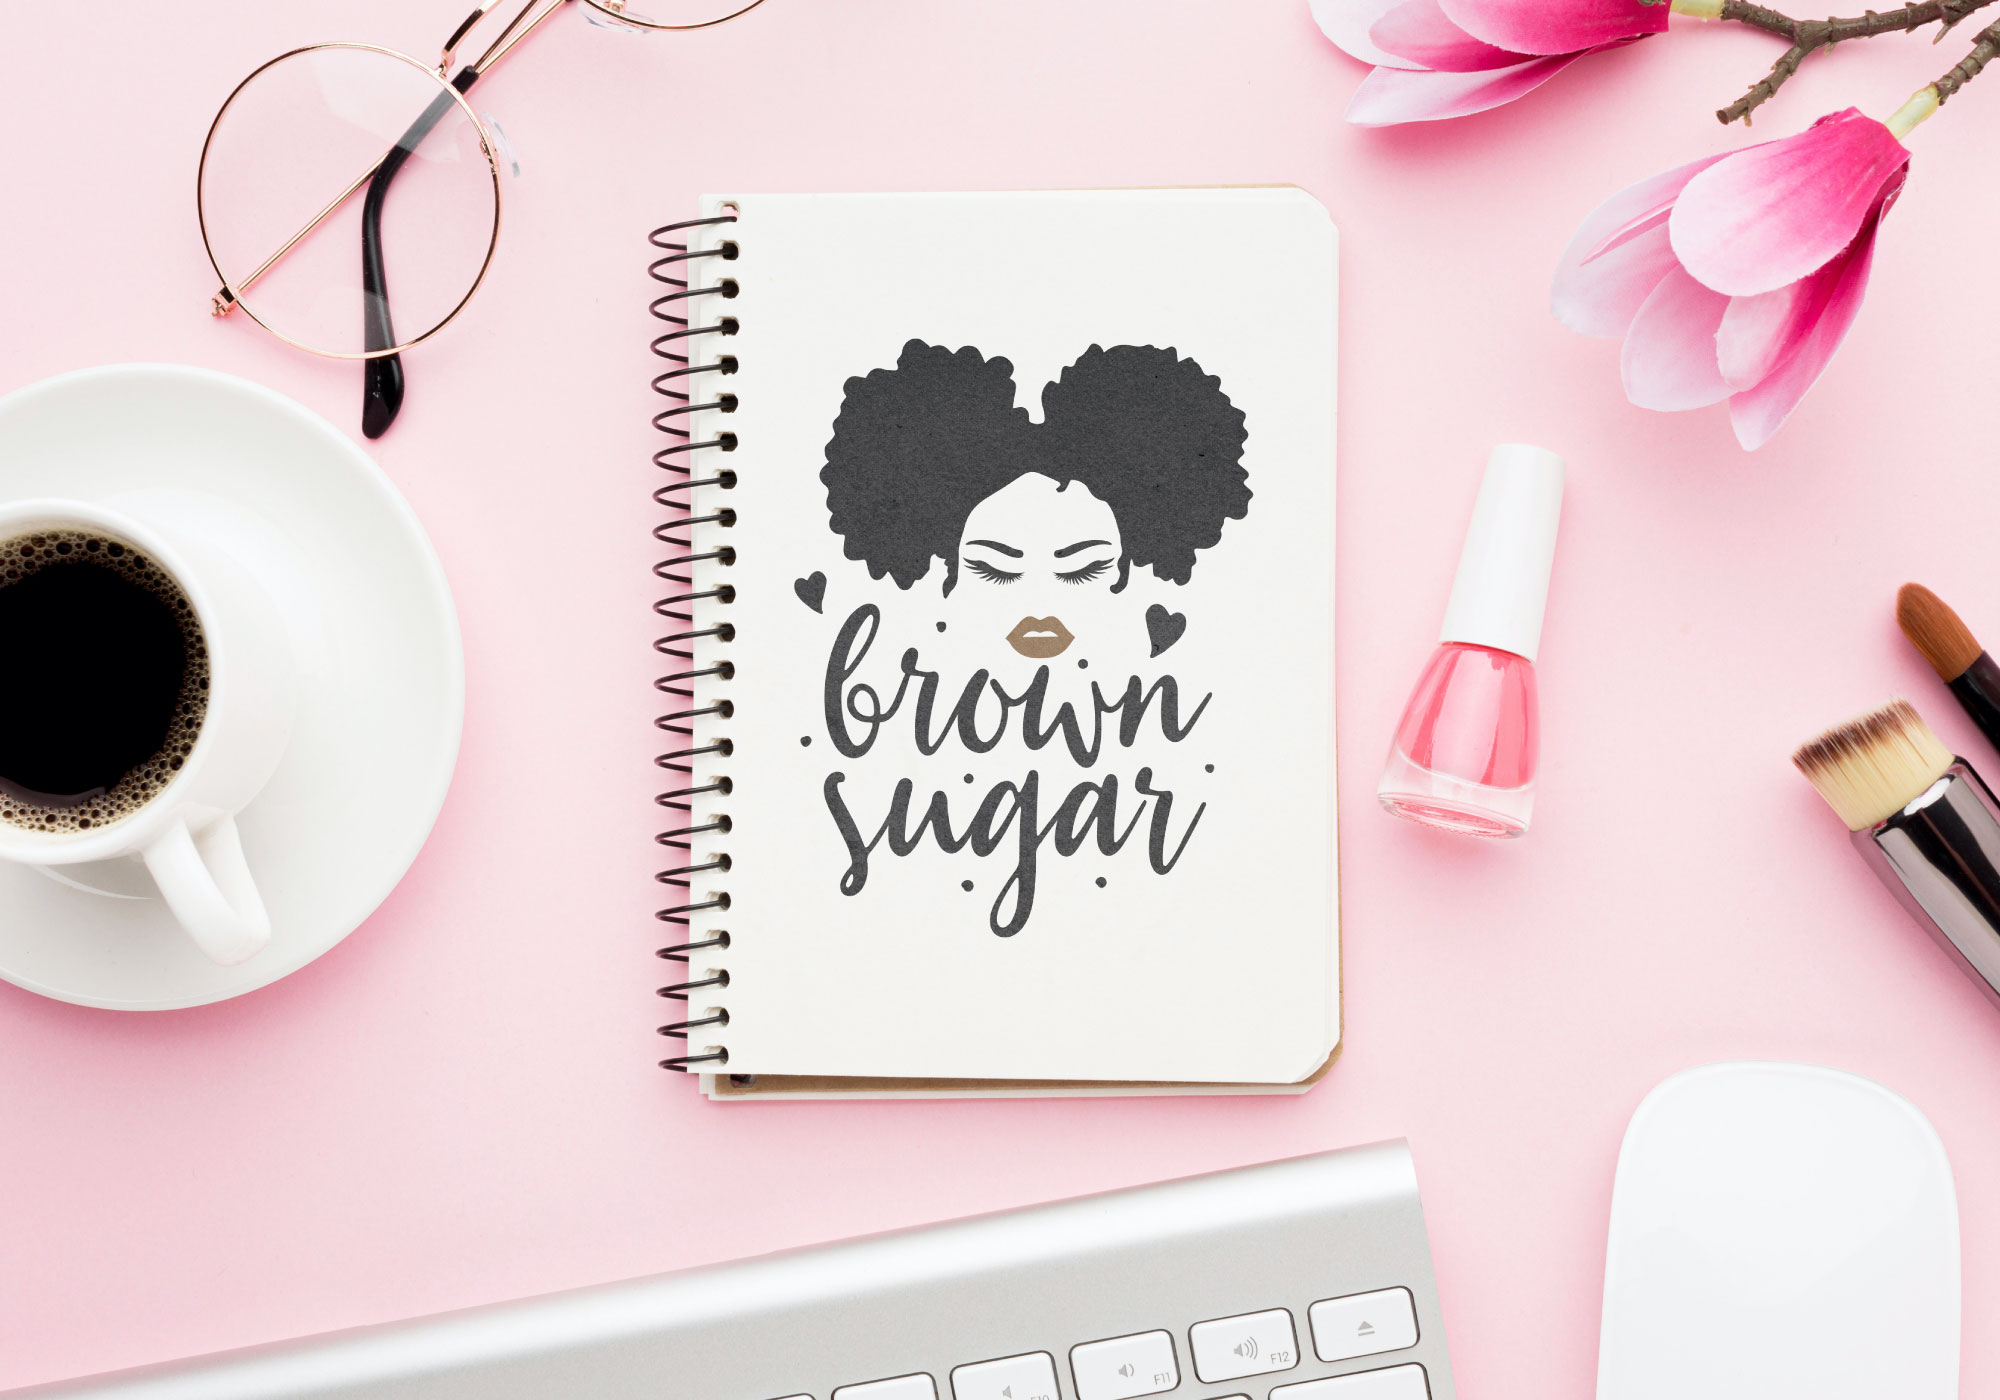 Free Brown Sugar SVG Cut File